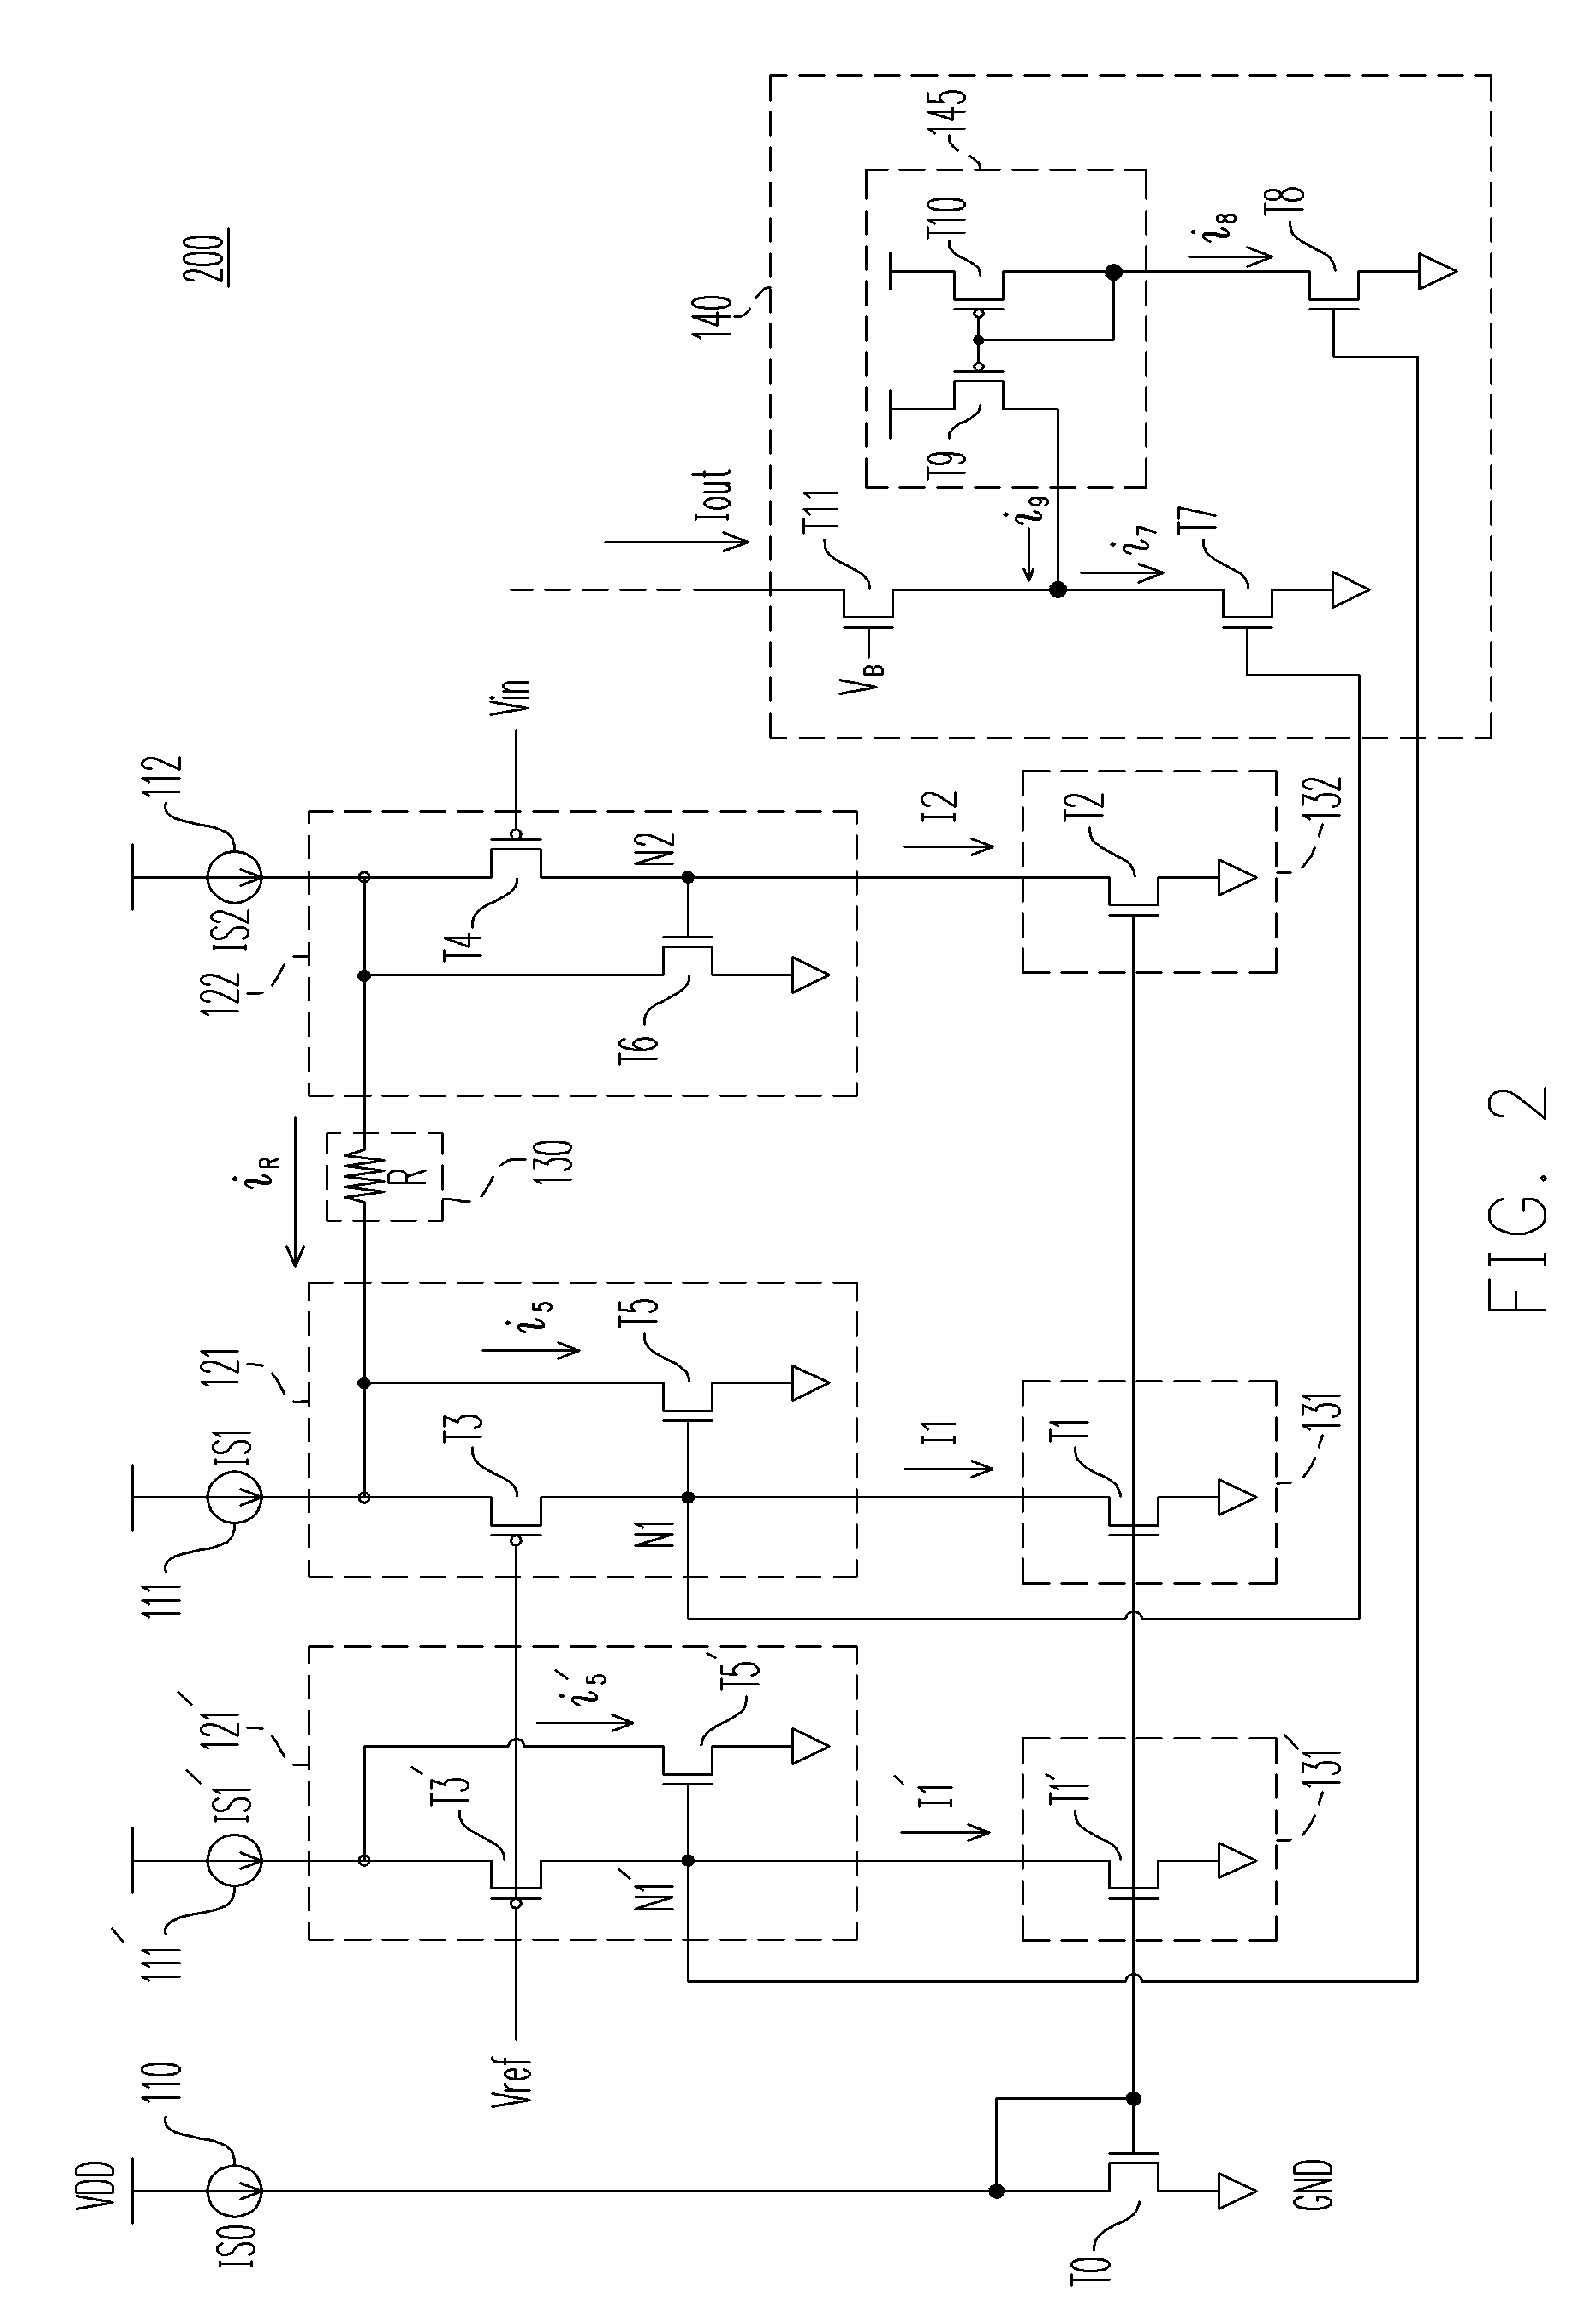 Operational transconductance amplifier